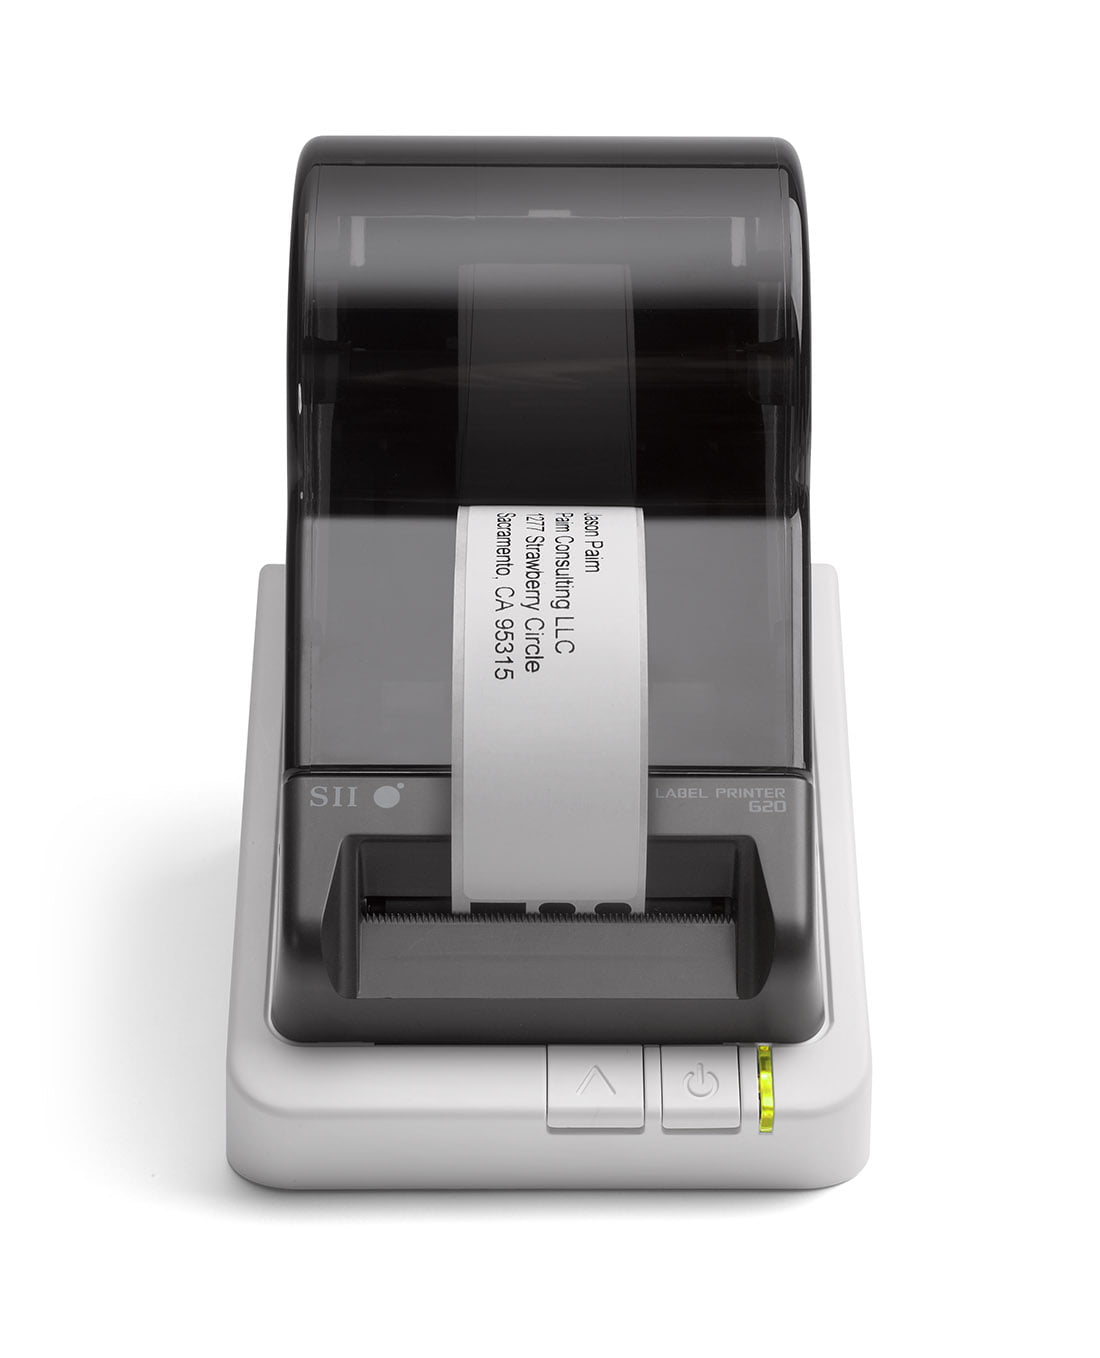 Seiko SLP620 desktop label printer